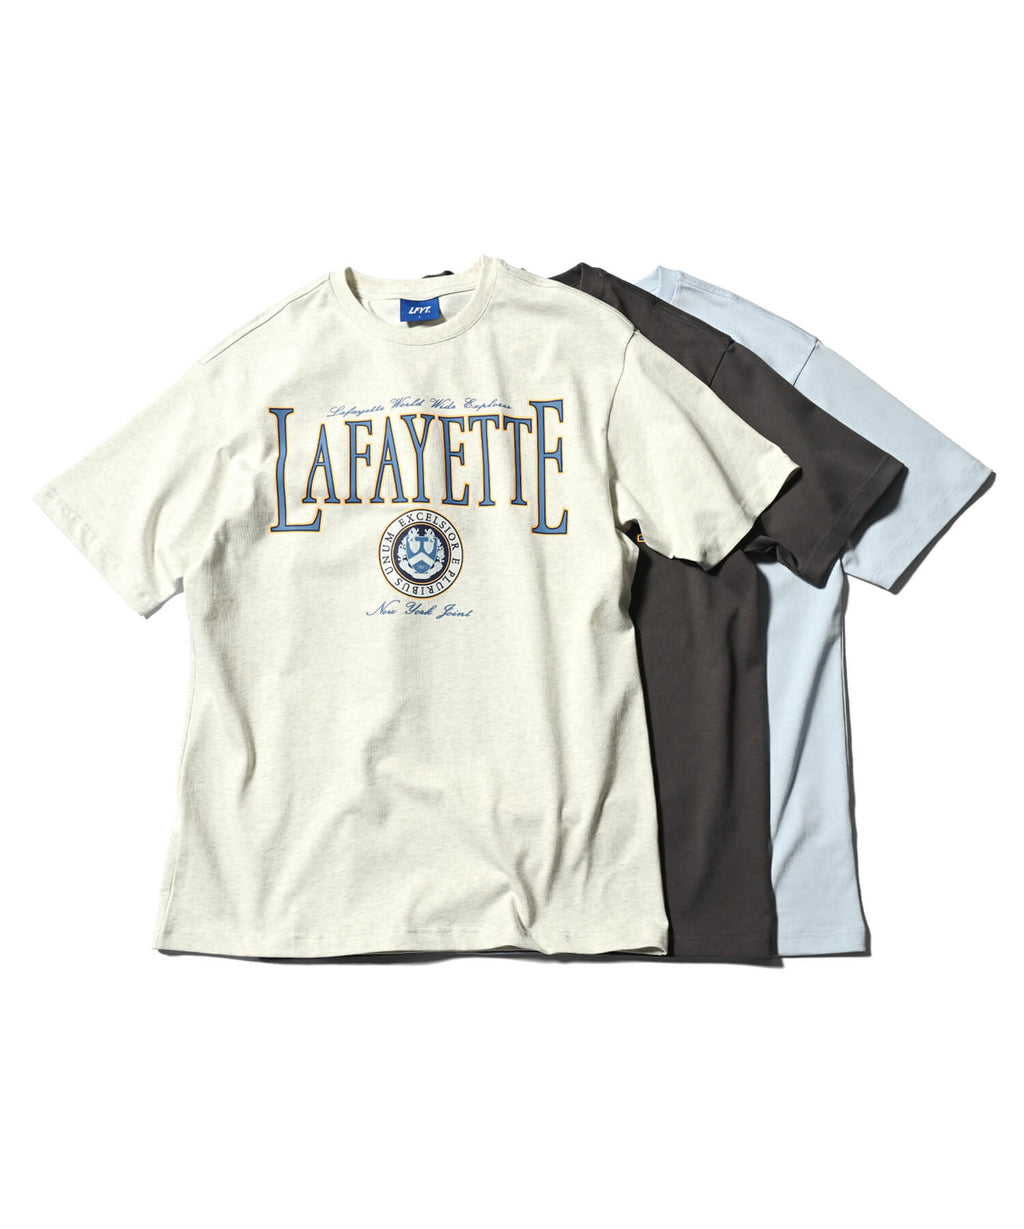 LFYT - LAFAYETTE COAT OF ARMS TEE LA230103